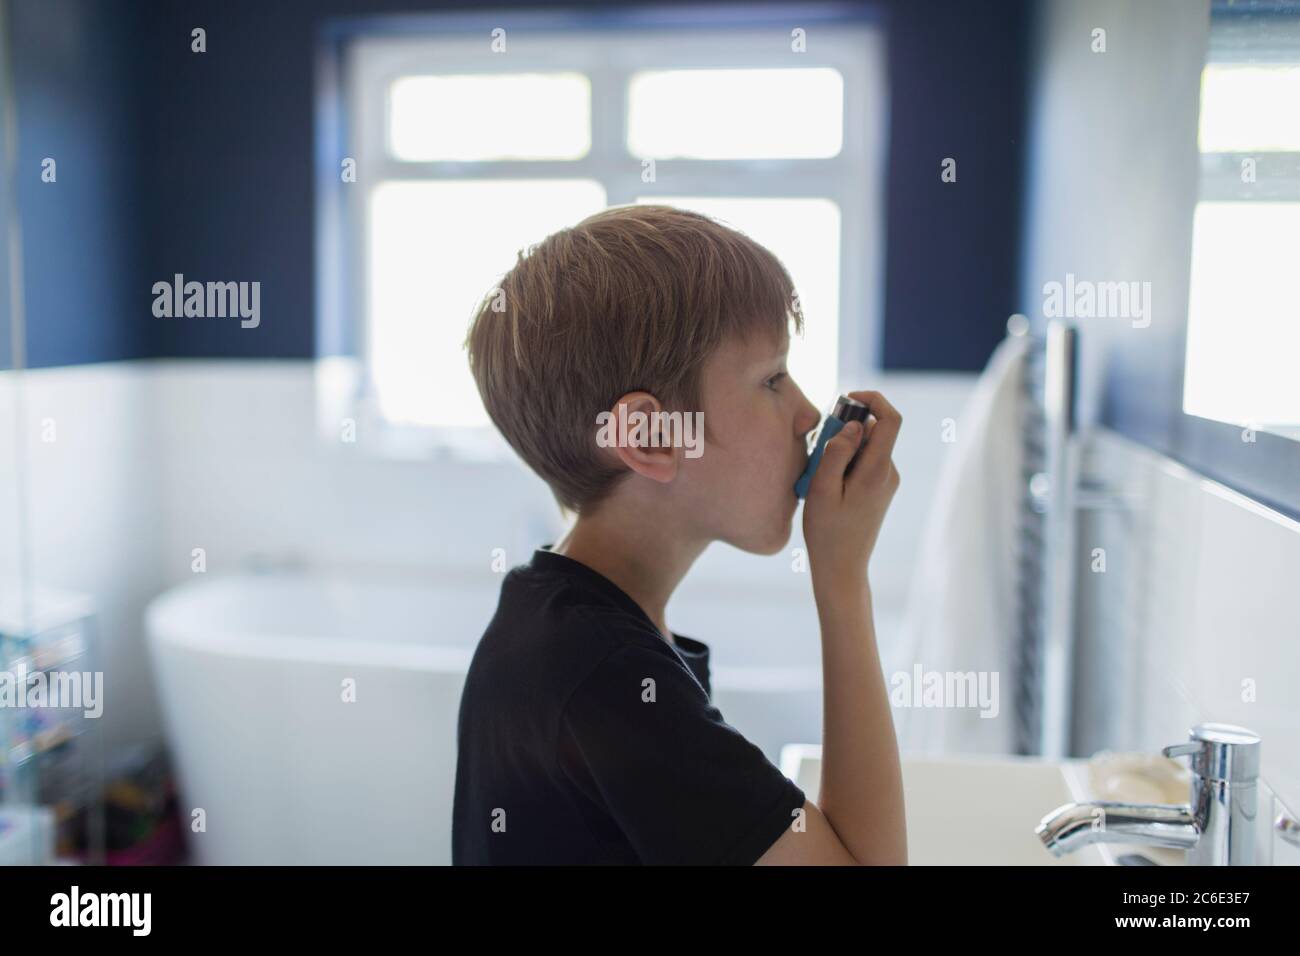 Boy with asthma using inhaler in bathroom Stock Photo